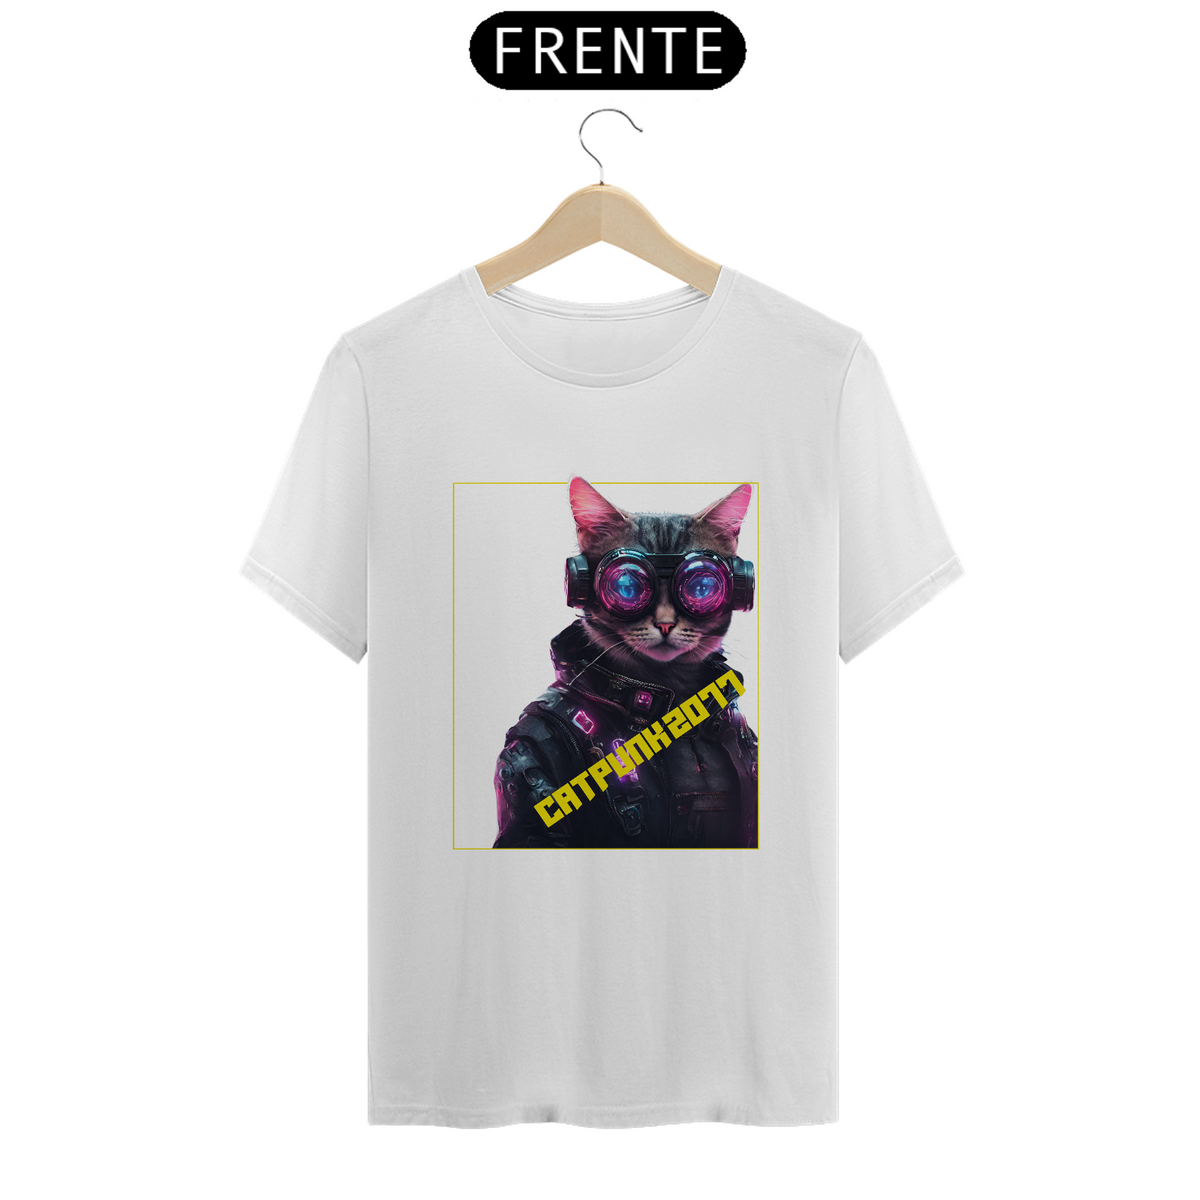 Nome do produto: Camiseta - Catpunk 2077